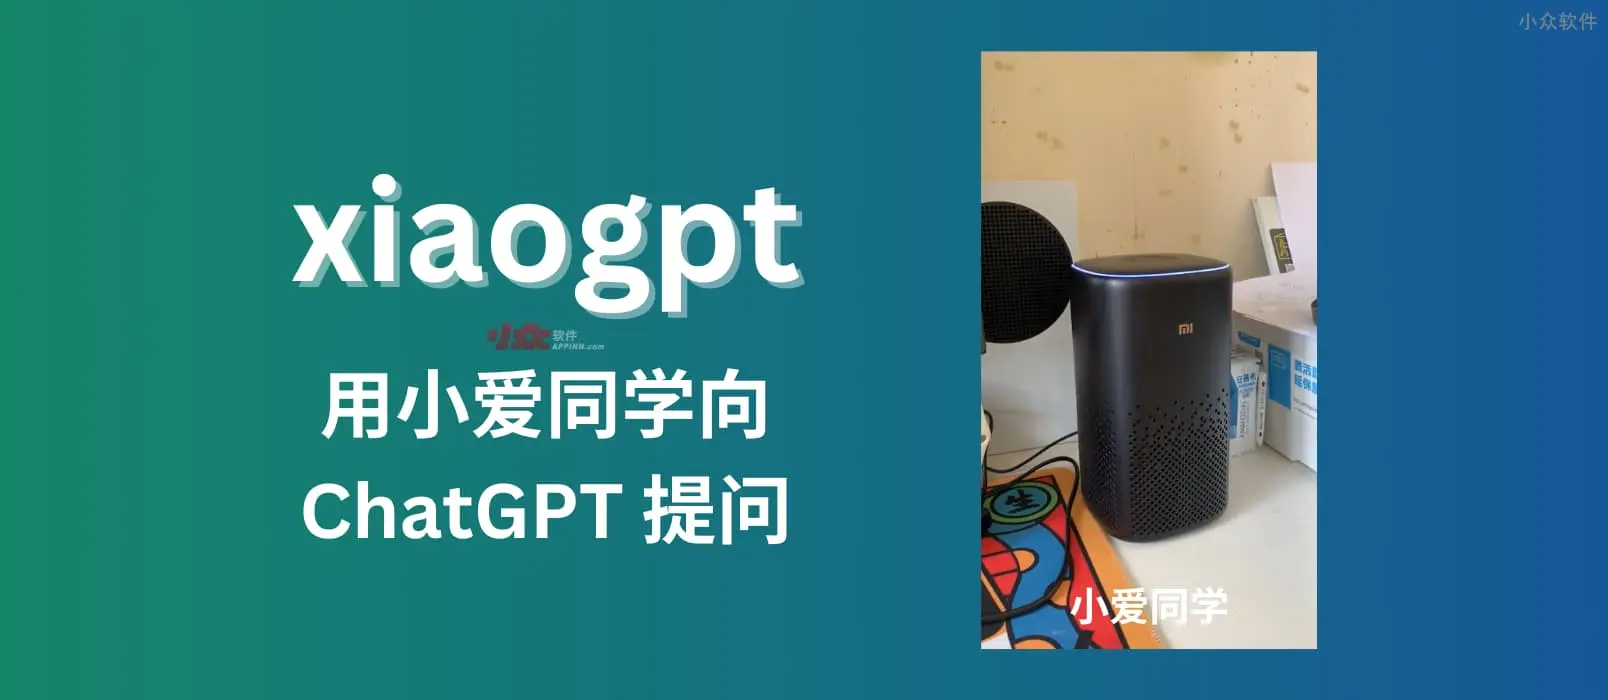 xiaogpt - 用小爱同学向 ChatGPT 提问